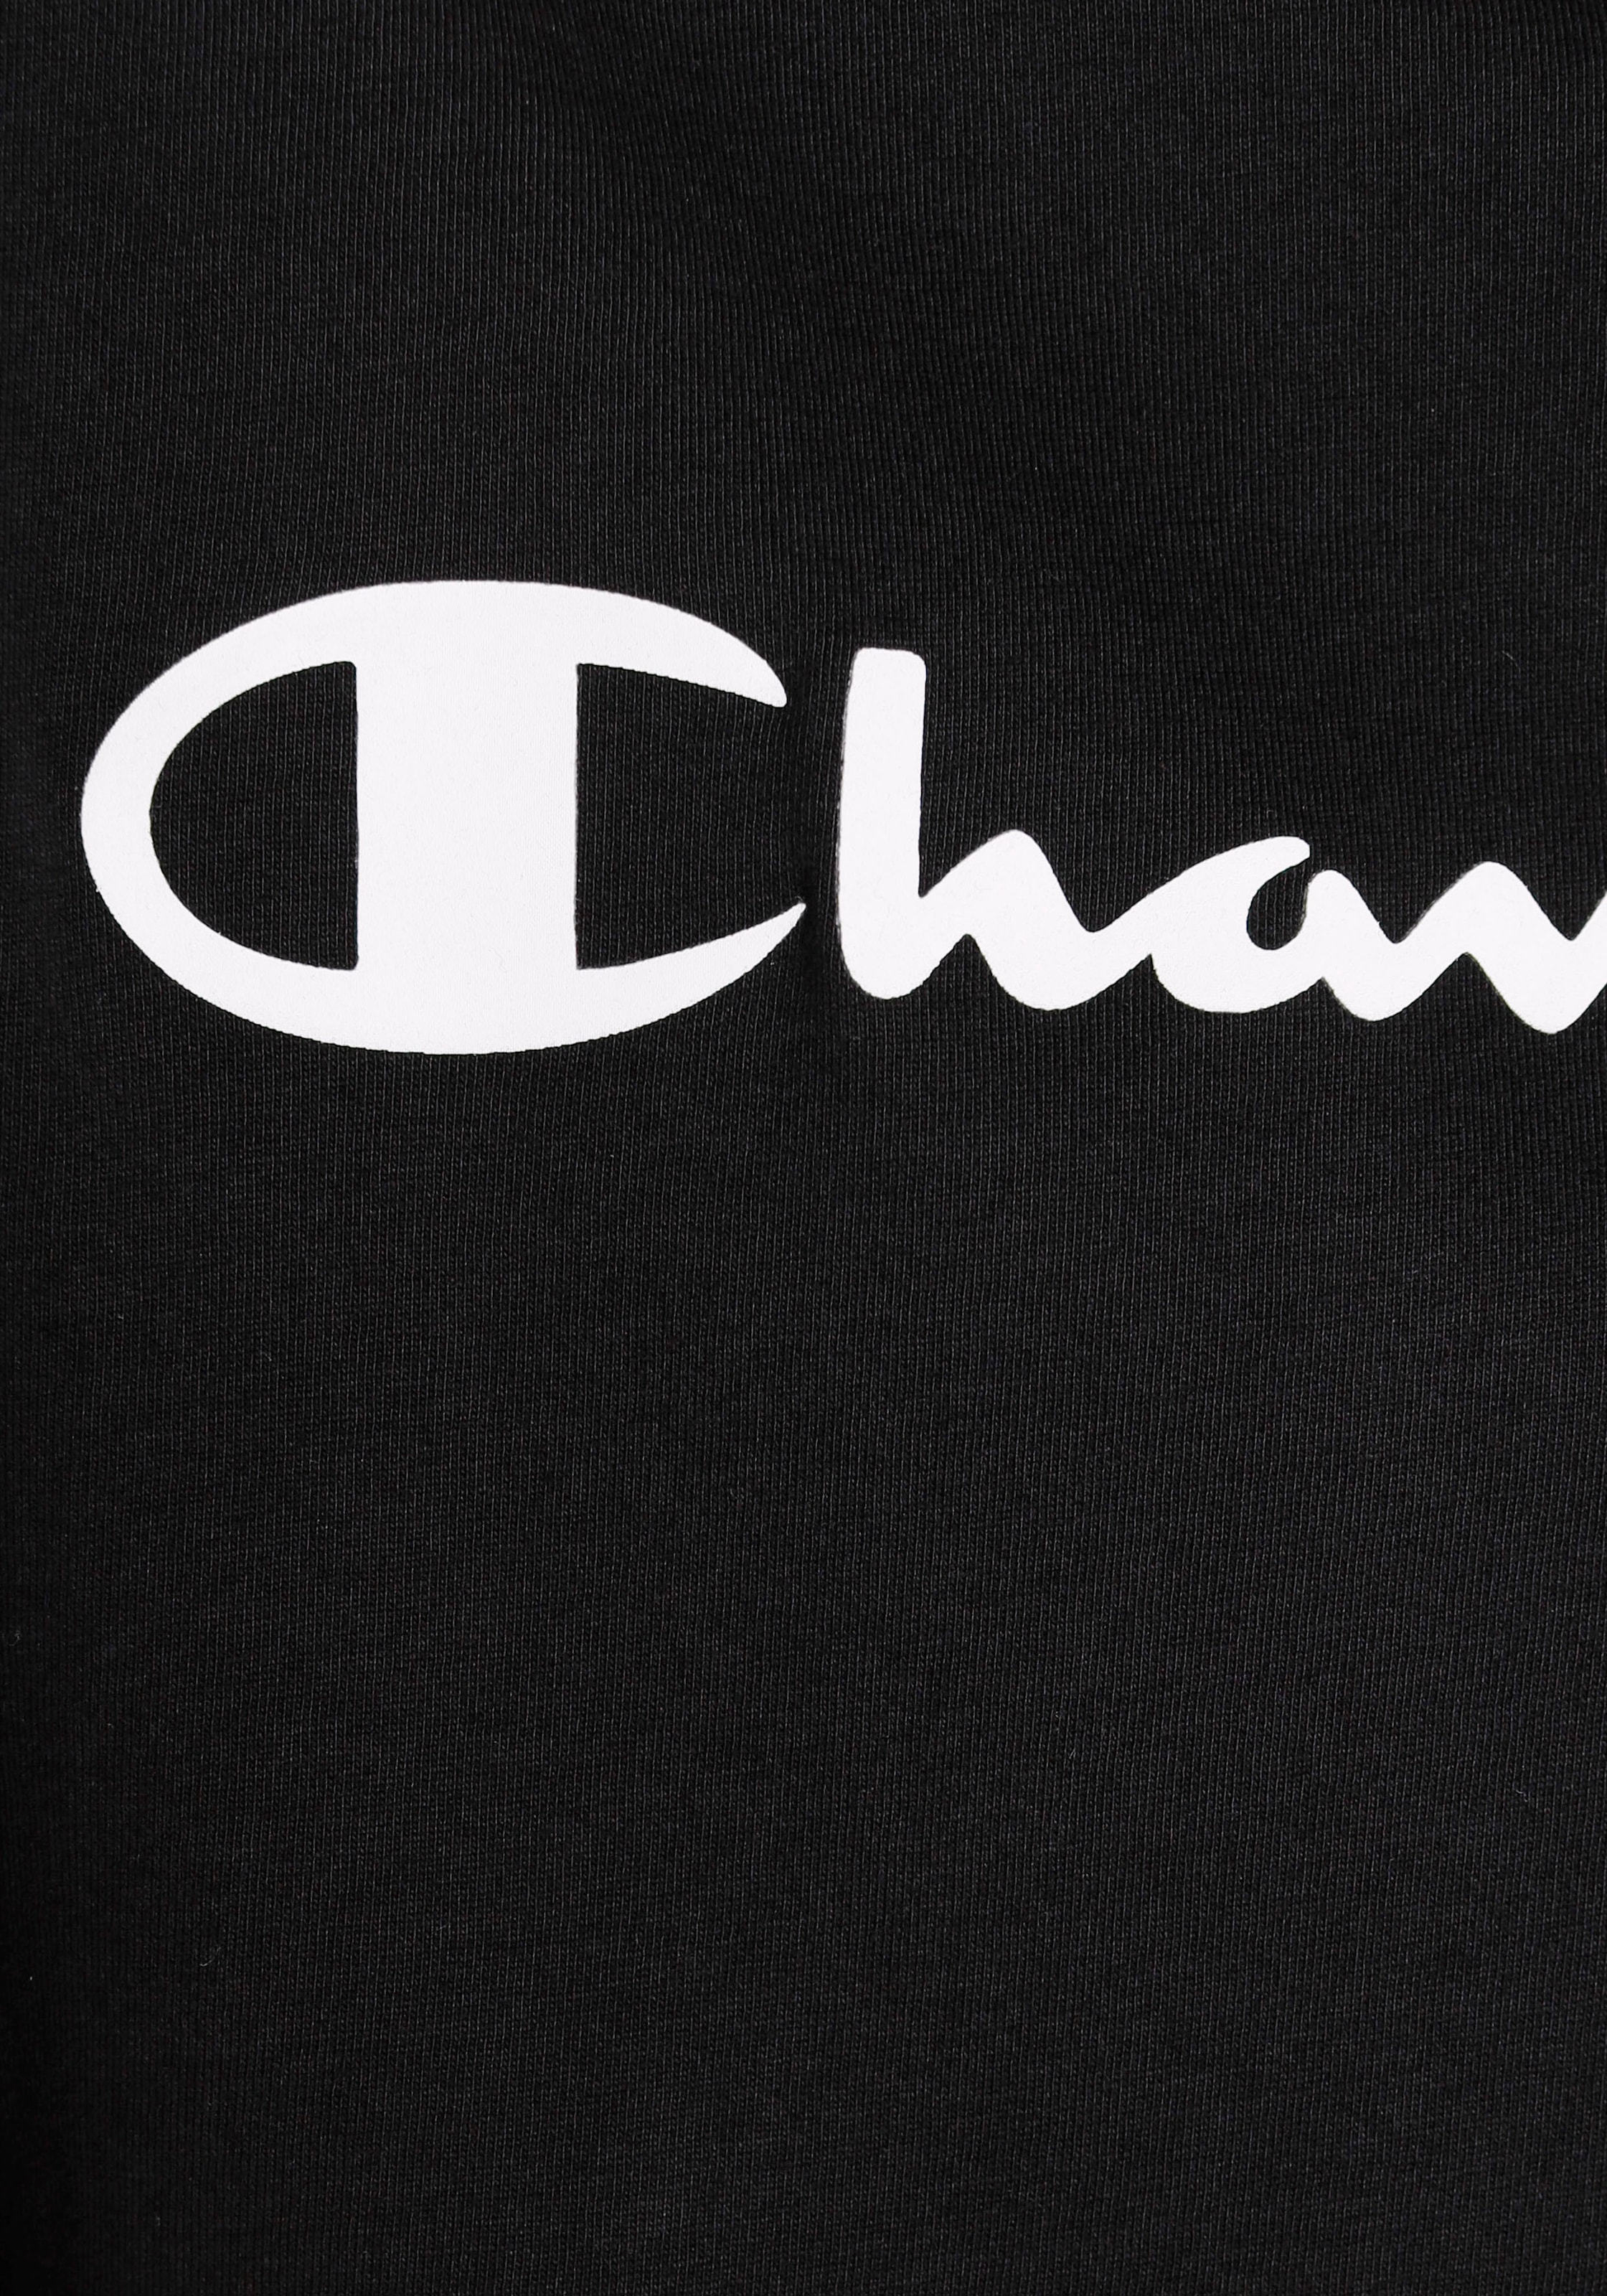 Champion Langarmshirt »Long Sleeve Crewneck T-Shirt«